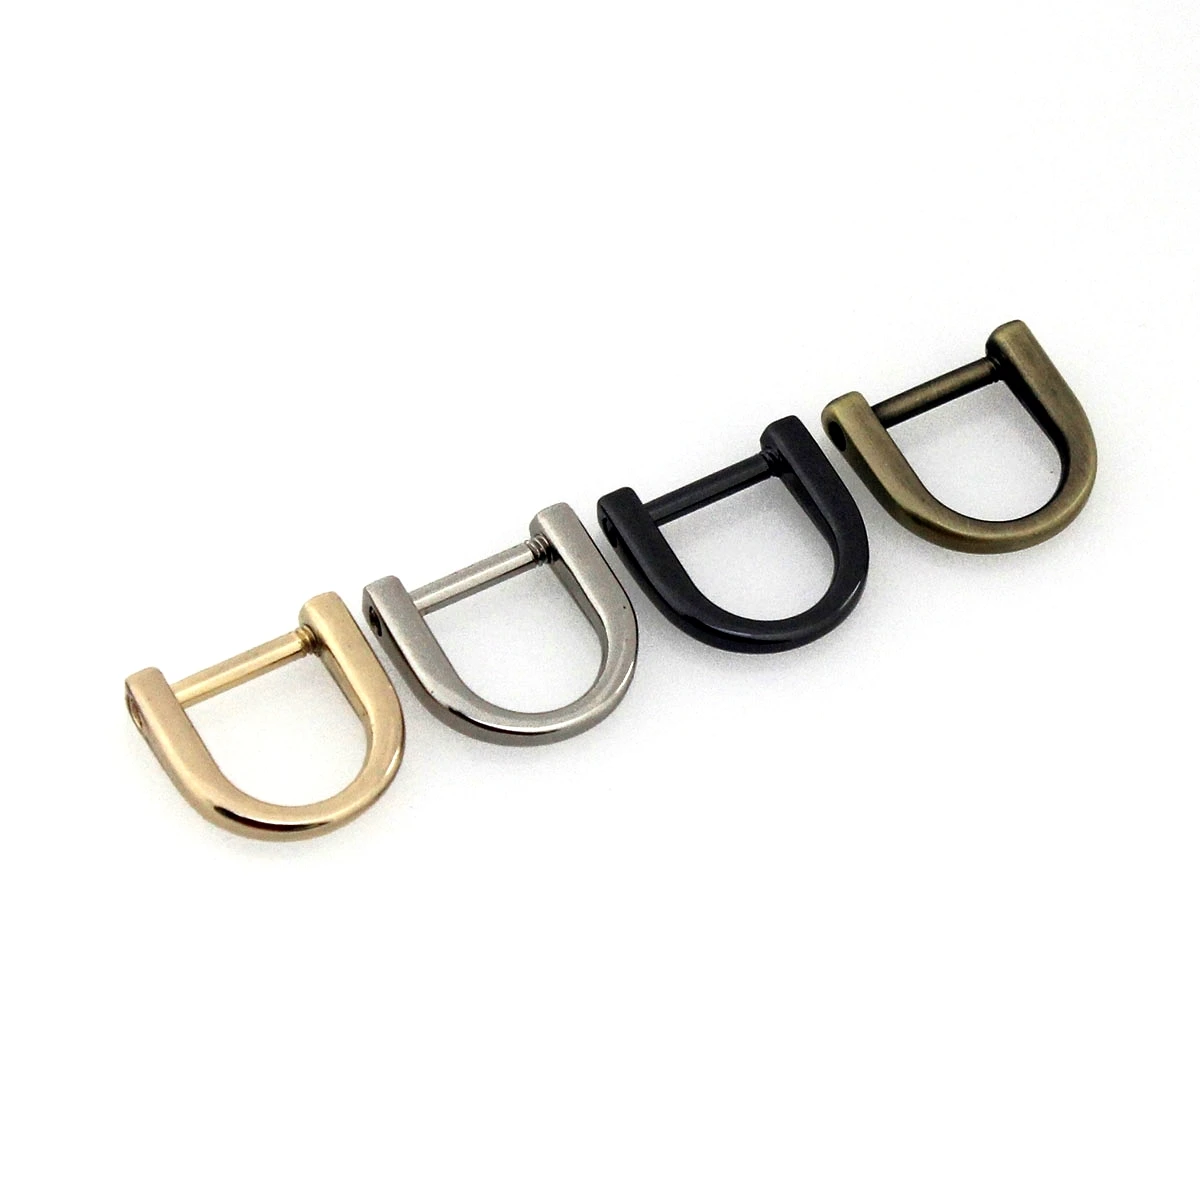 1pcs Metal Detachable Open Screw Dee D Ring Buckle Shackle Clasp for Leather Craft Bag Strap Belt Handle Shoulder Webbing 10mm